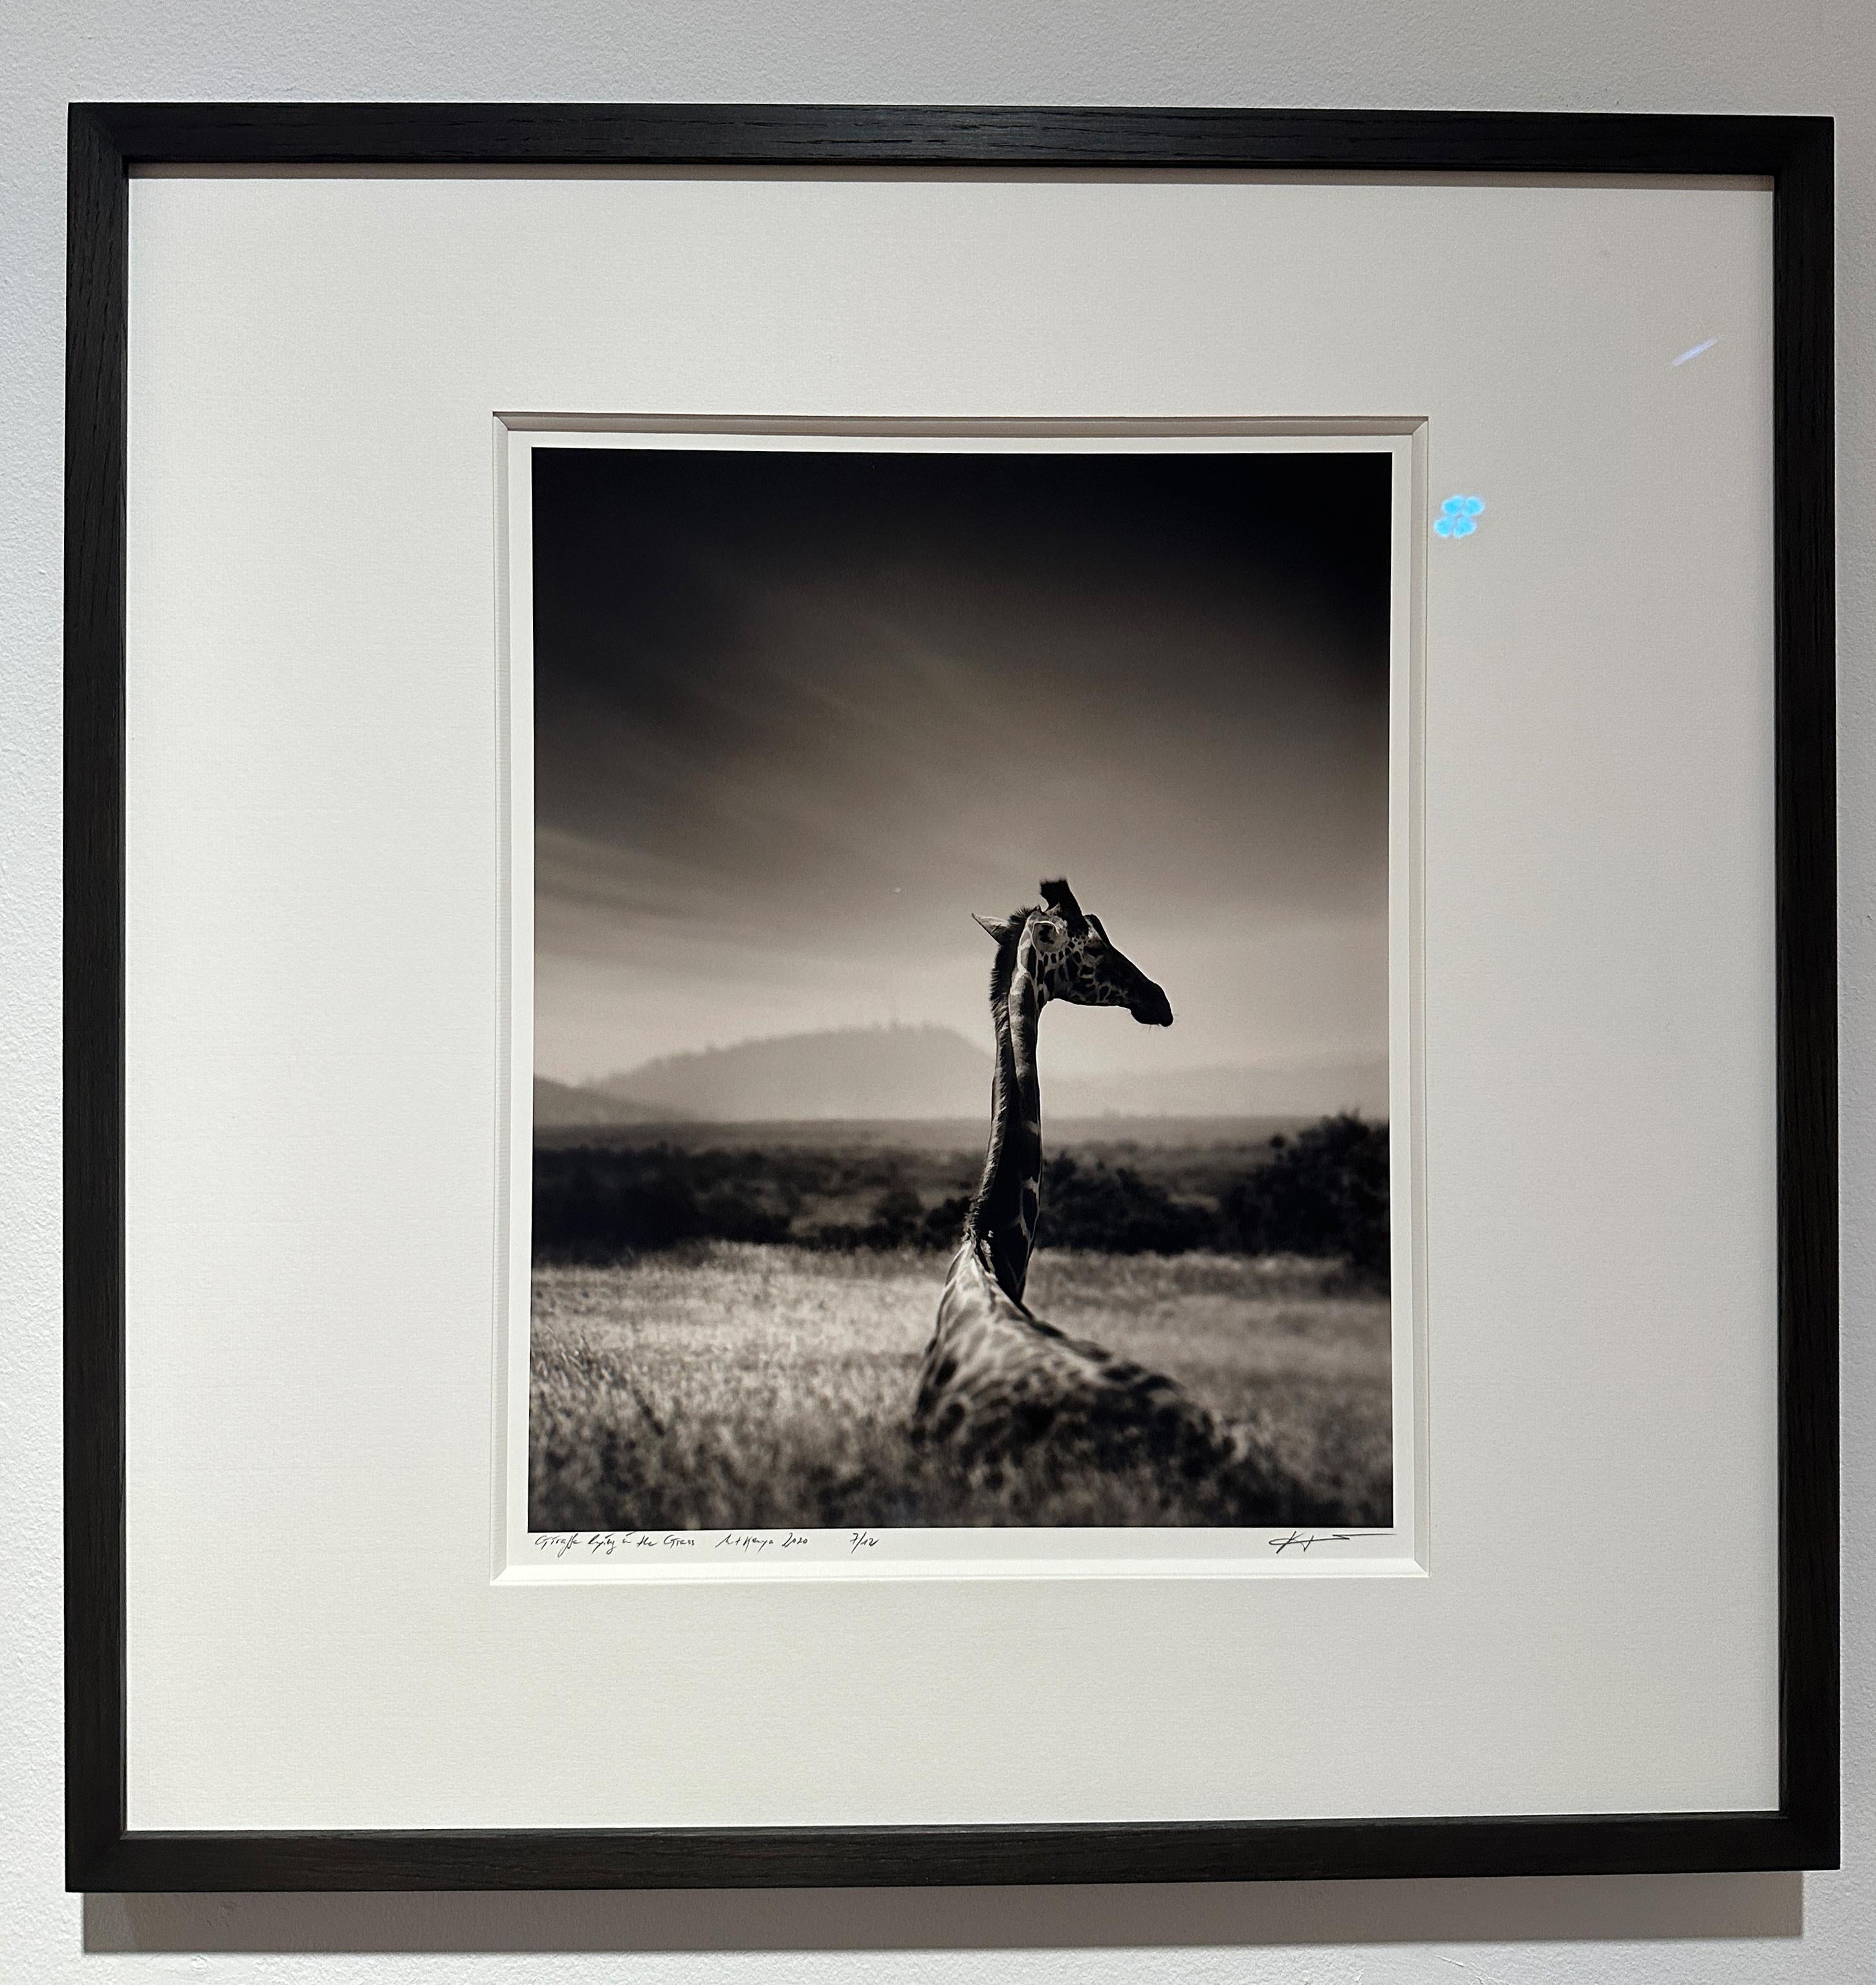 Giraffe in grass, Giraffe, animal, Africa, black and white photography - Photograph by Joachim Schmeisser